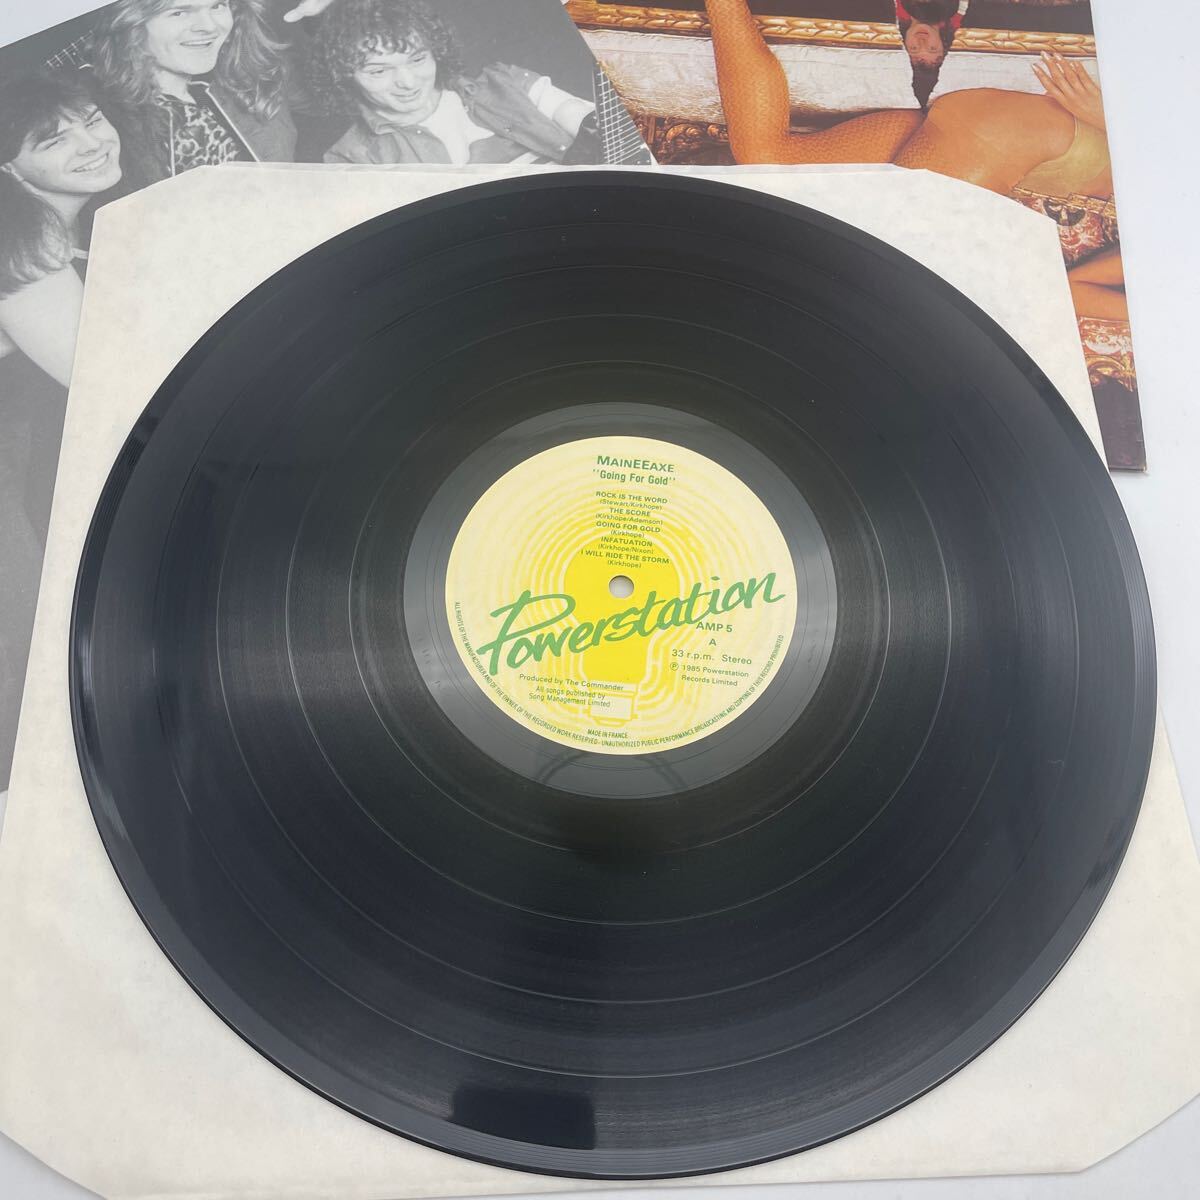 【UKオリジナル】Maineeaxe/Going For Gold/レコード/LP/NWOBHM/85年作_画像6